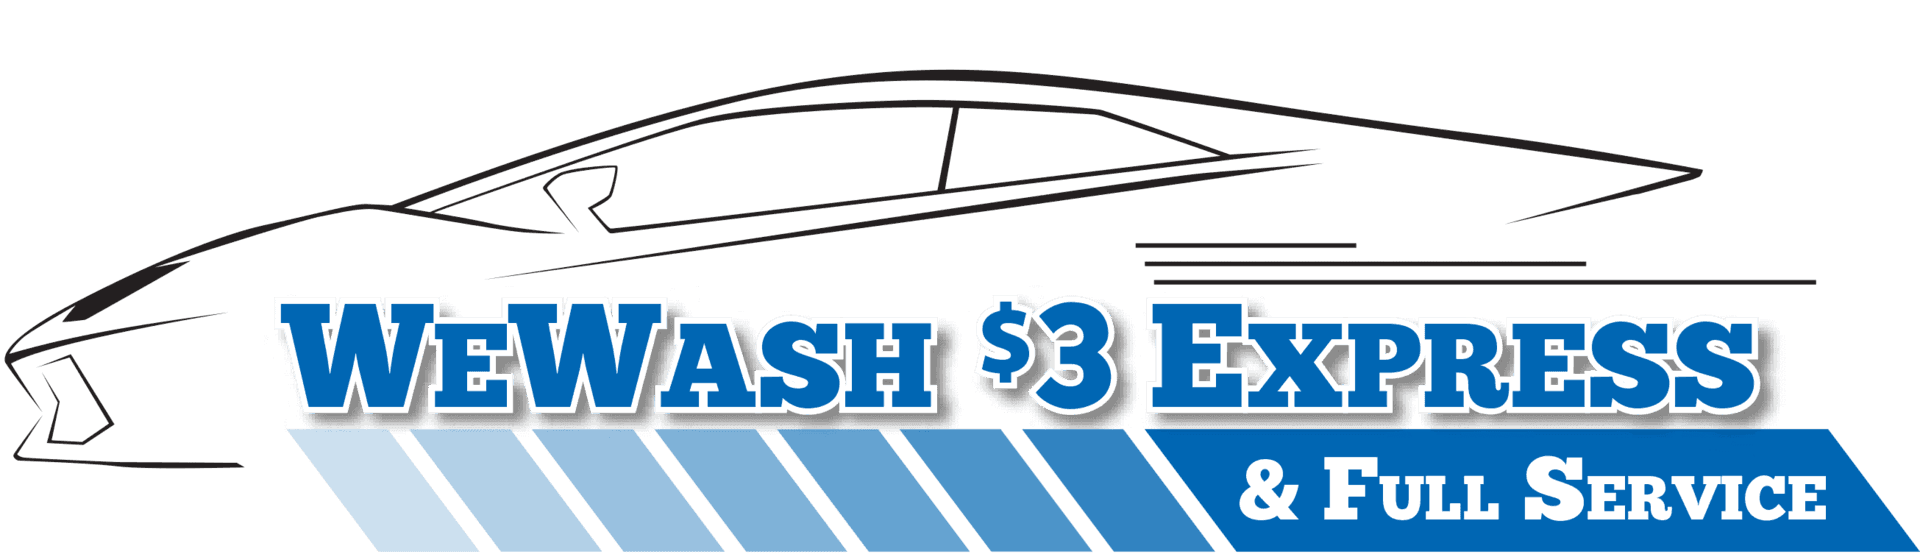 We Wash $3 Express Wash Inc. - Logo